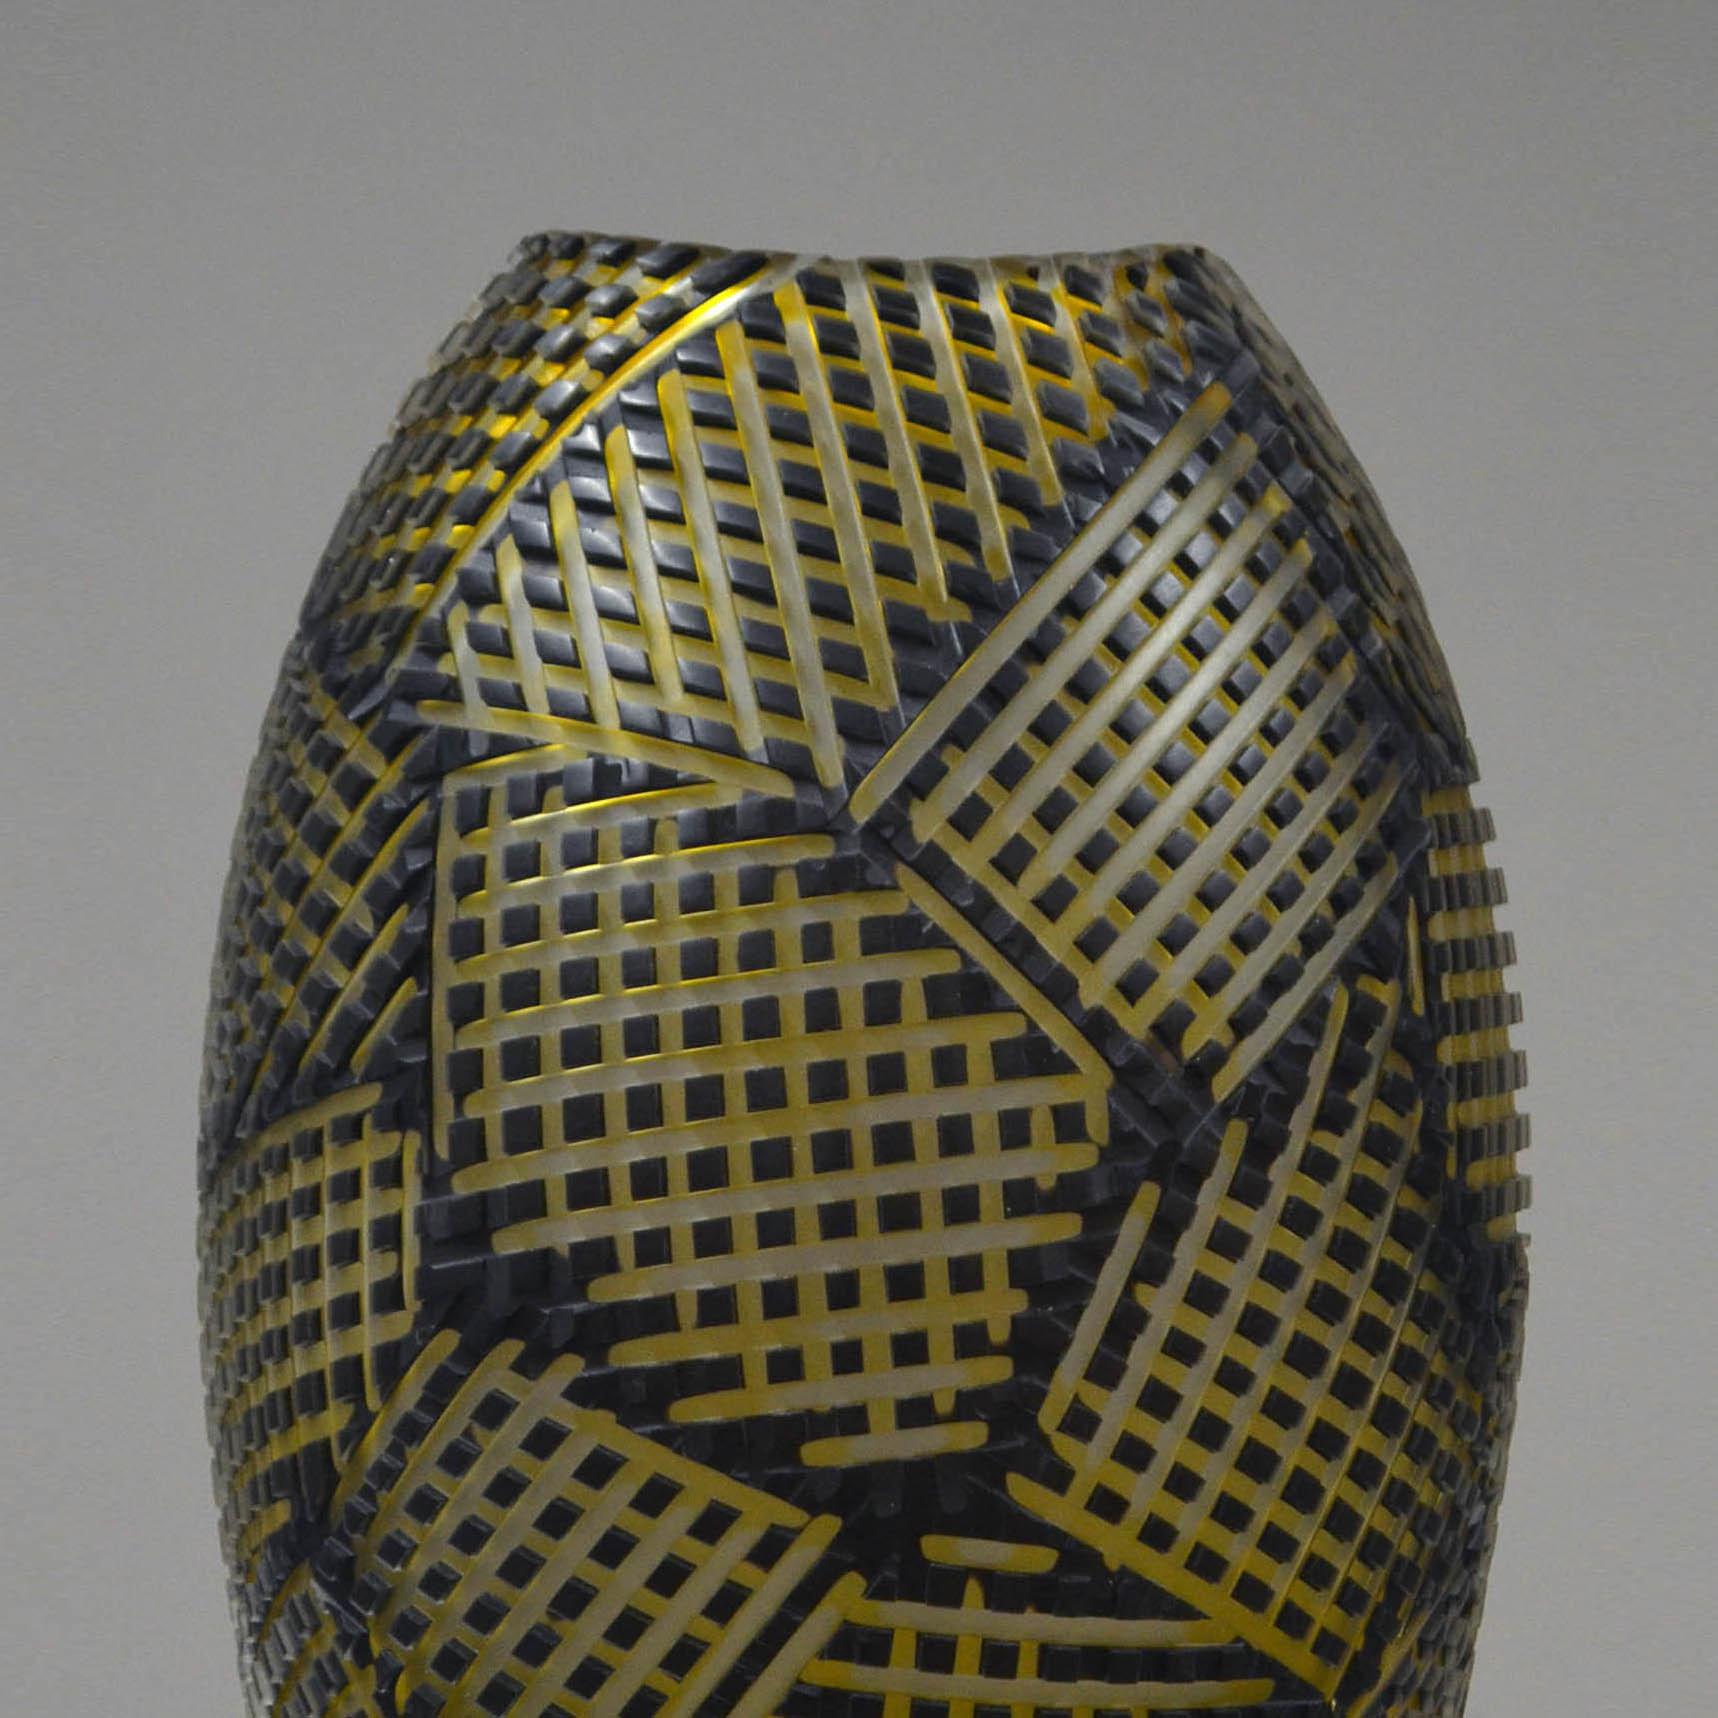 British Little Stitches II, an Art Glass Vase by Philip Baldwin & Monica Guggisberg